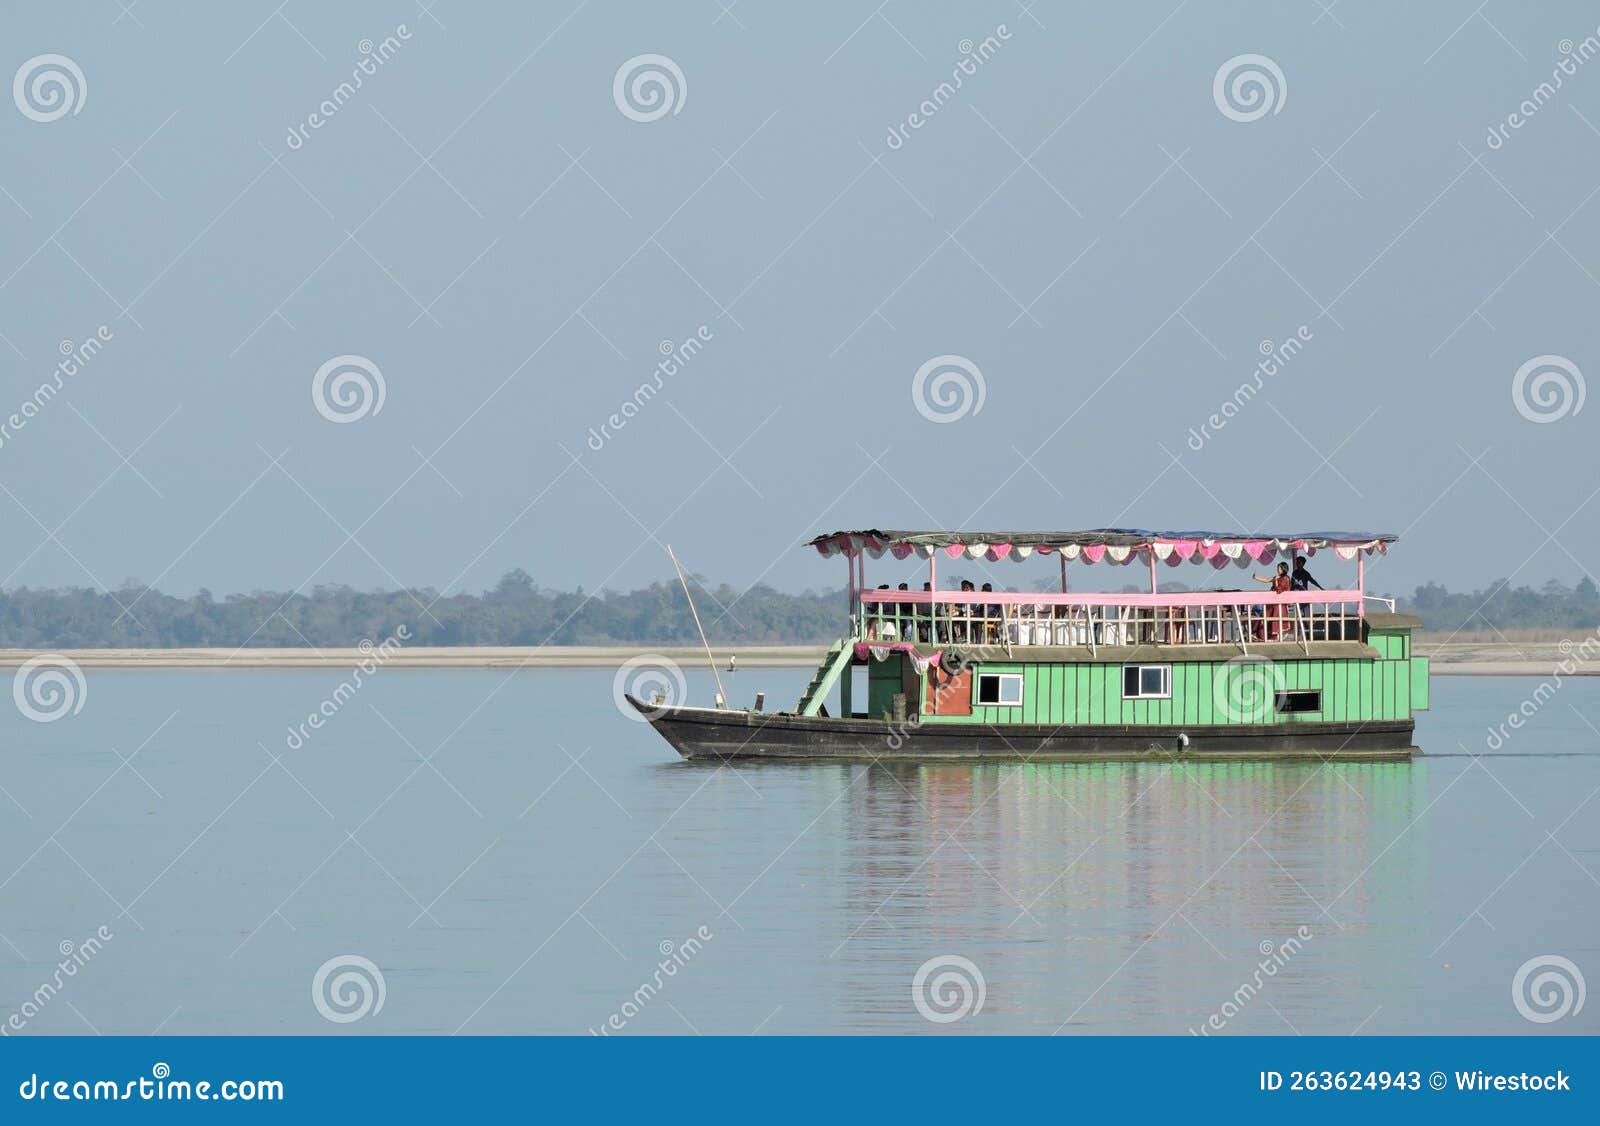 dibru saikhowa river cruise